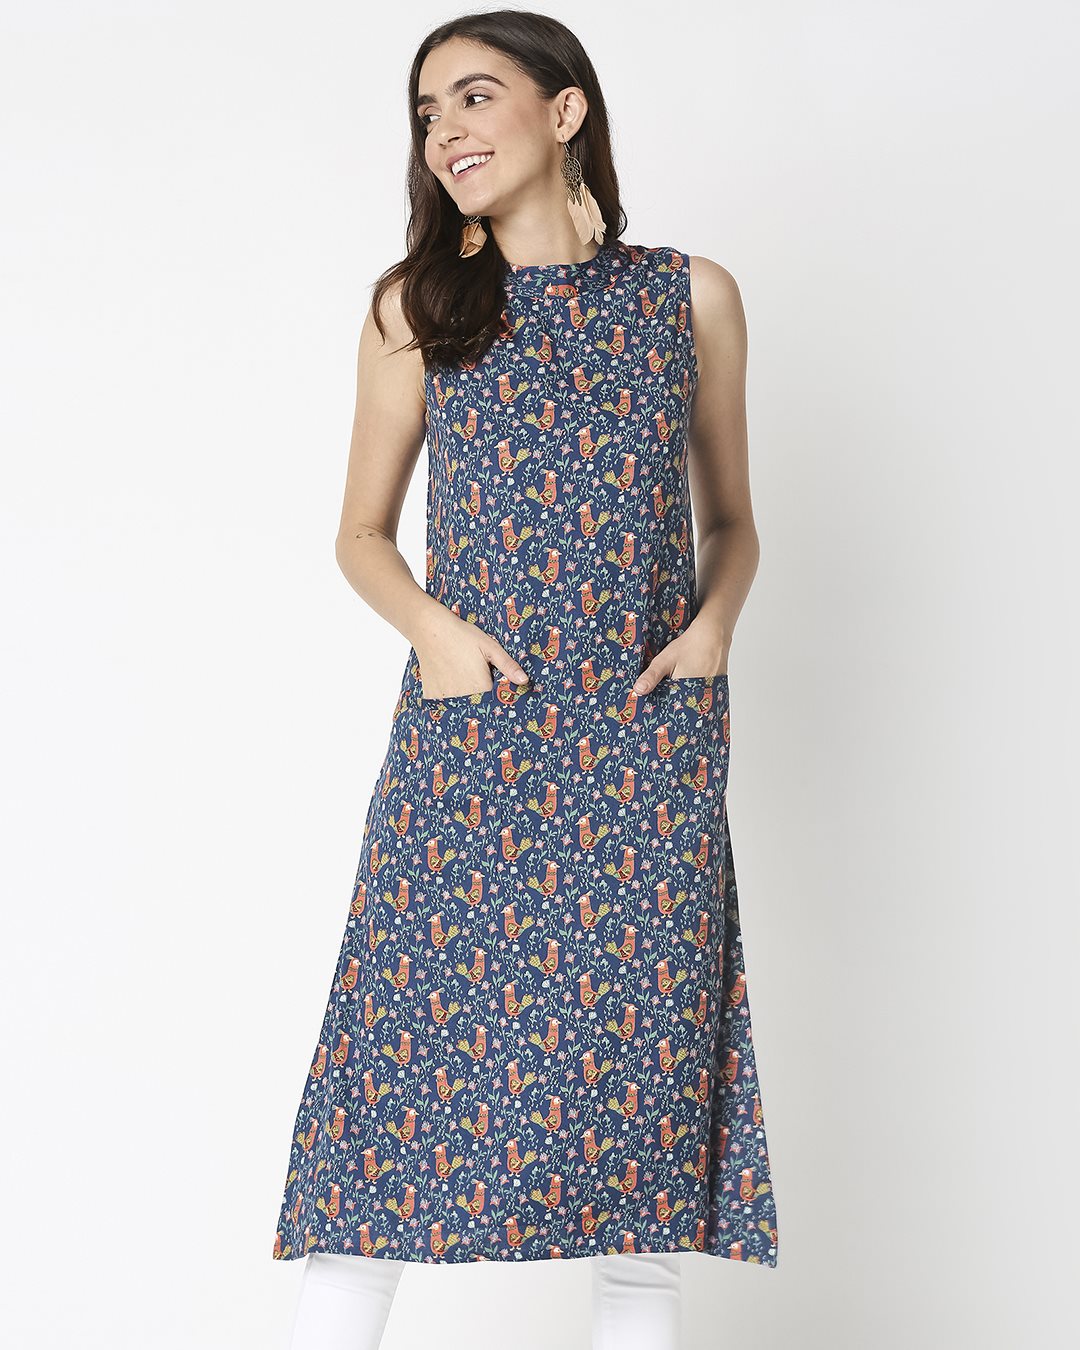 Buy Women Wish Printed Rayon Straight Sleeveless Kurta with Palazzo  (X-Small, Grey) at Amazon.in